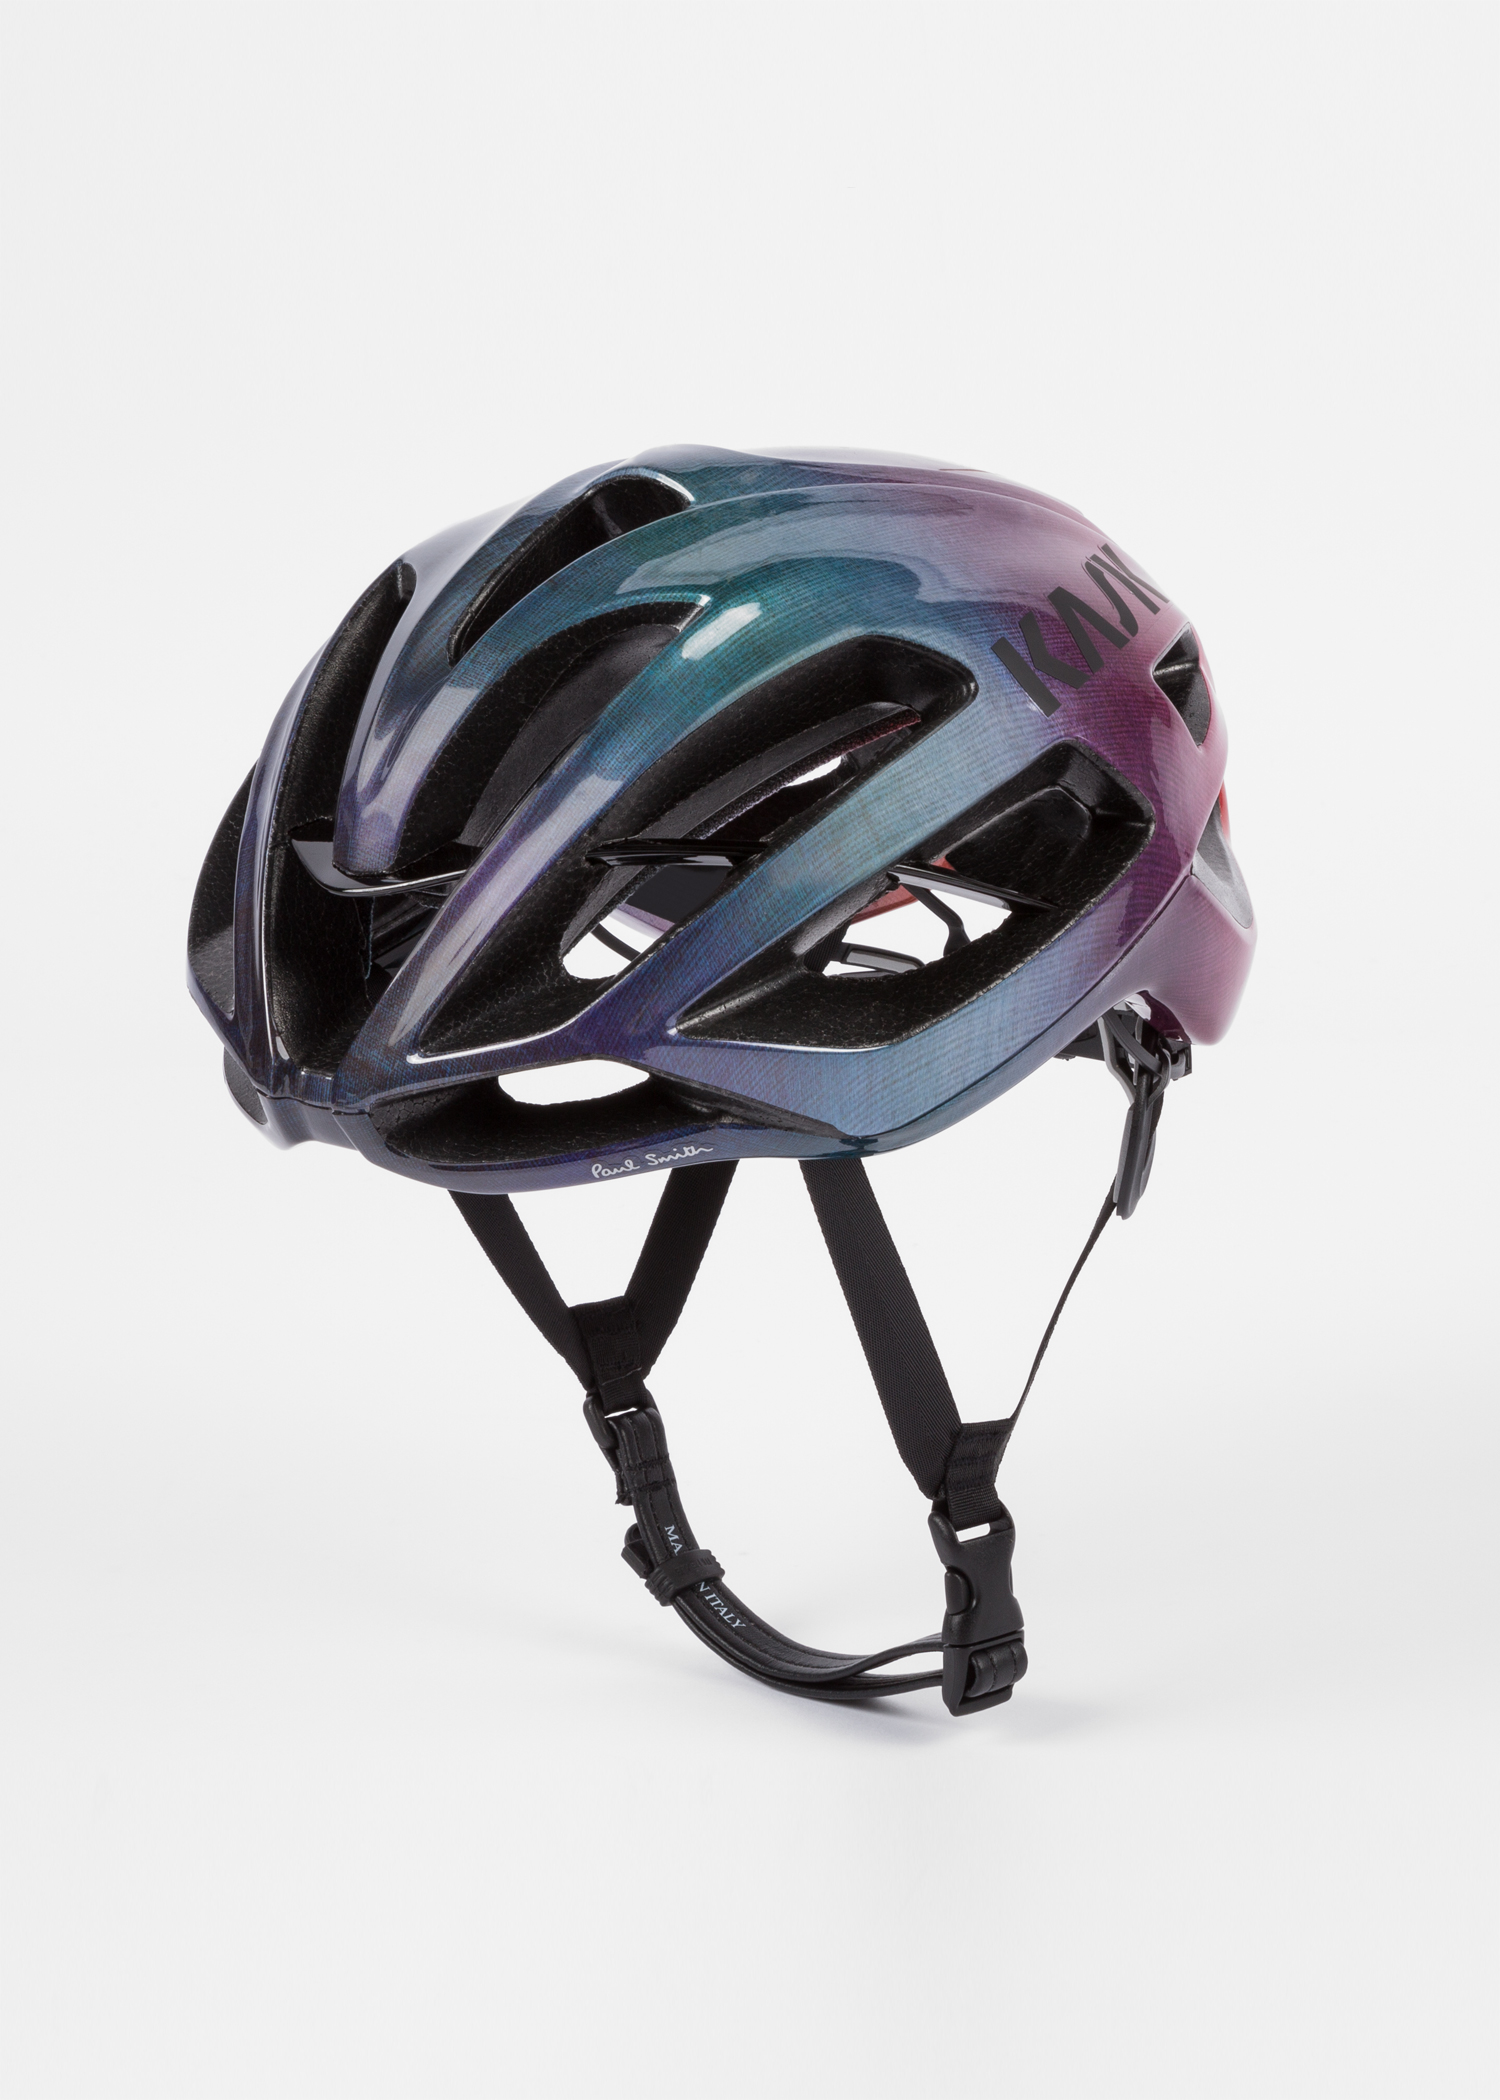 KASK KASK PROTONE 2.0 Cycling Helmet Paul Smith Ltd Addition Sml 